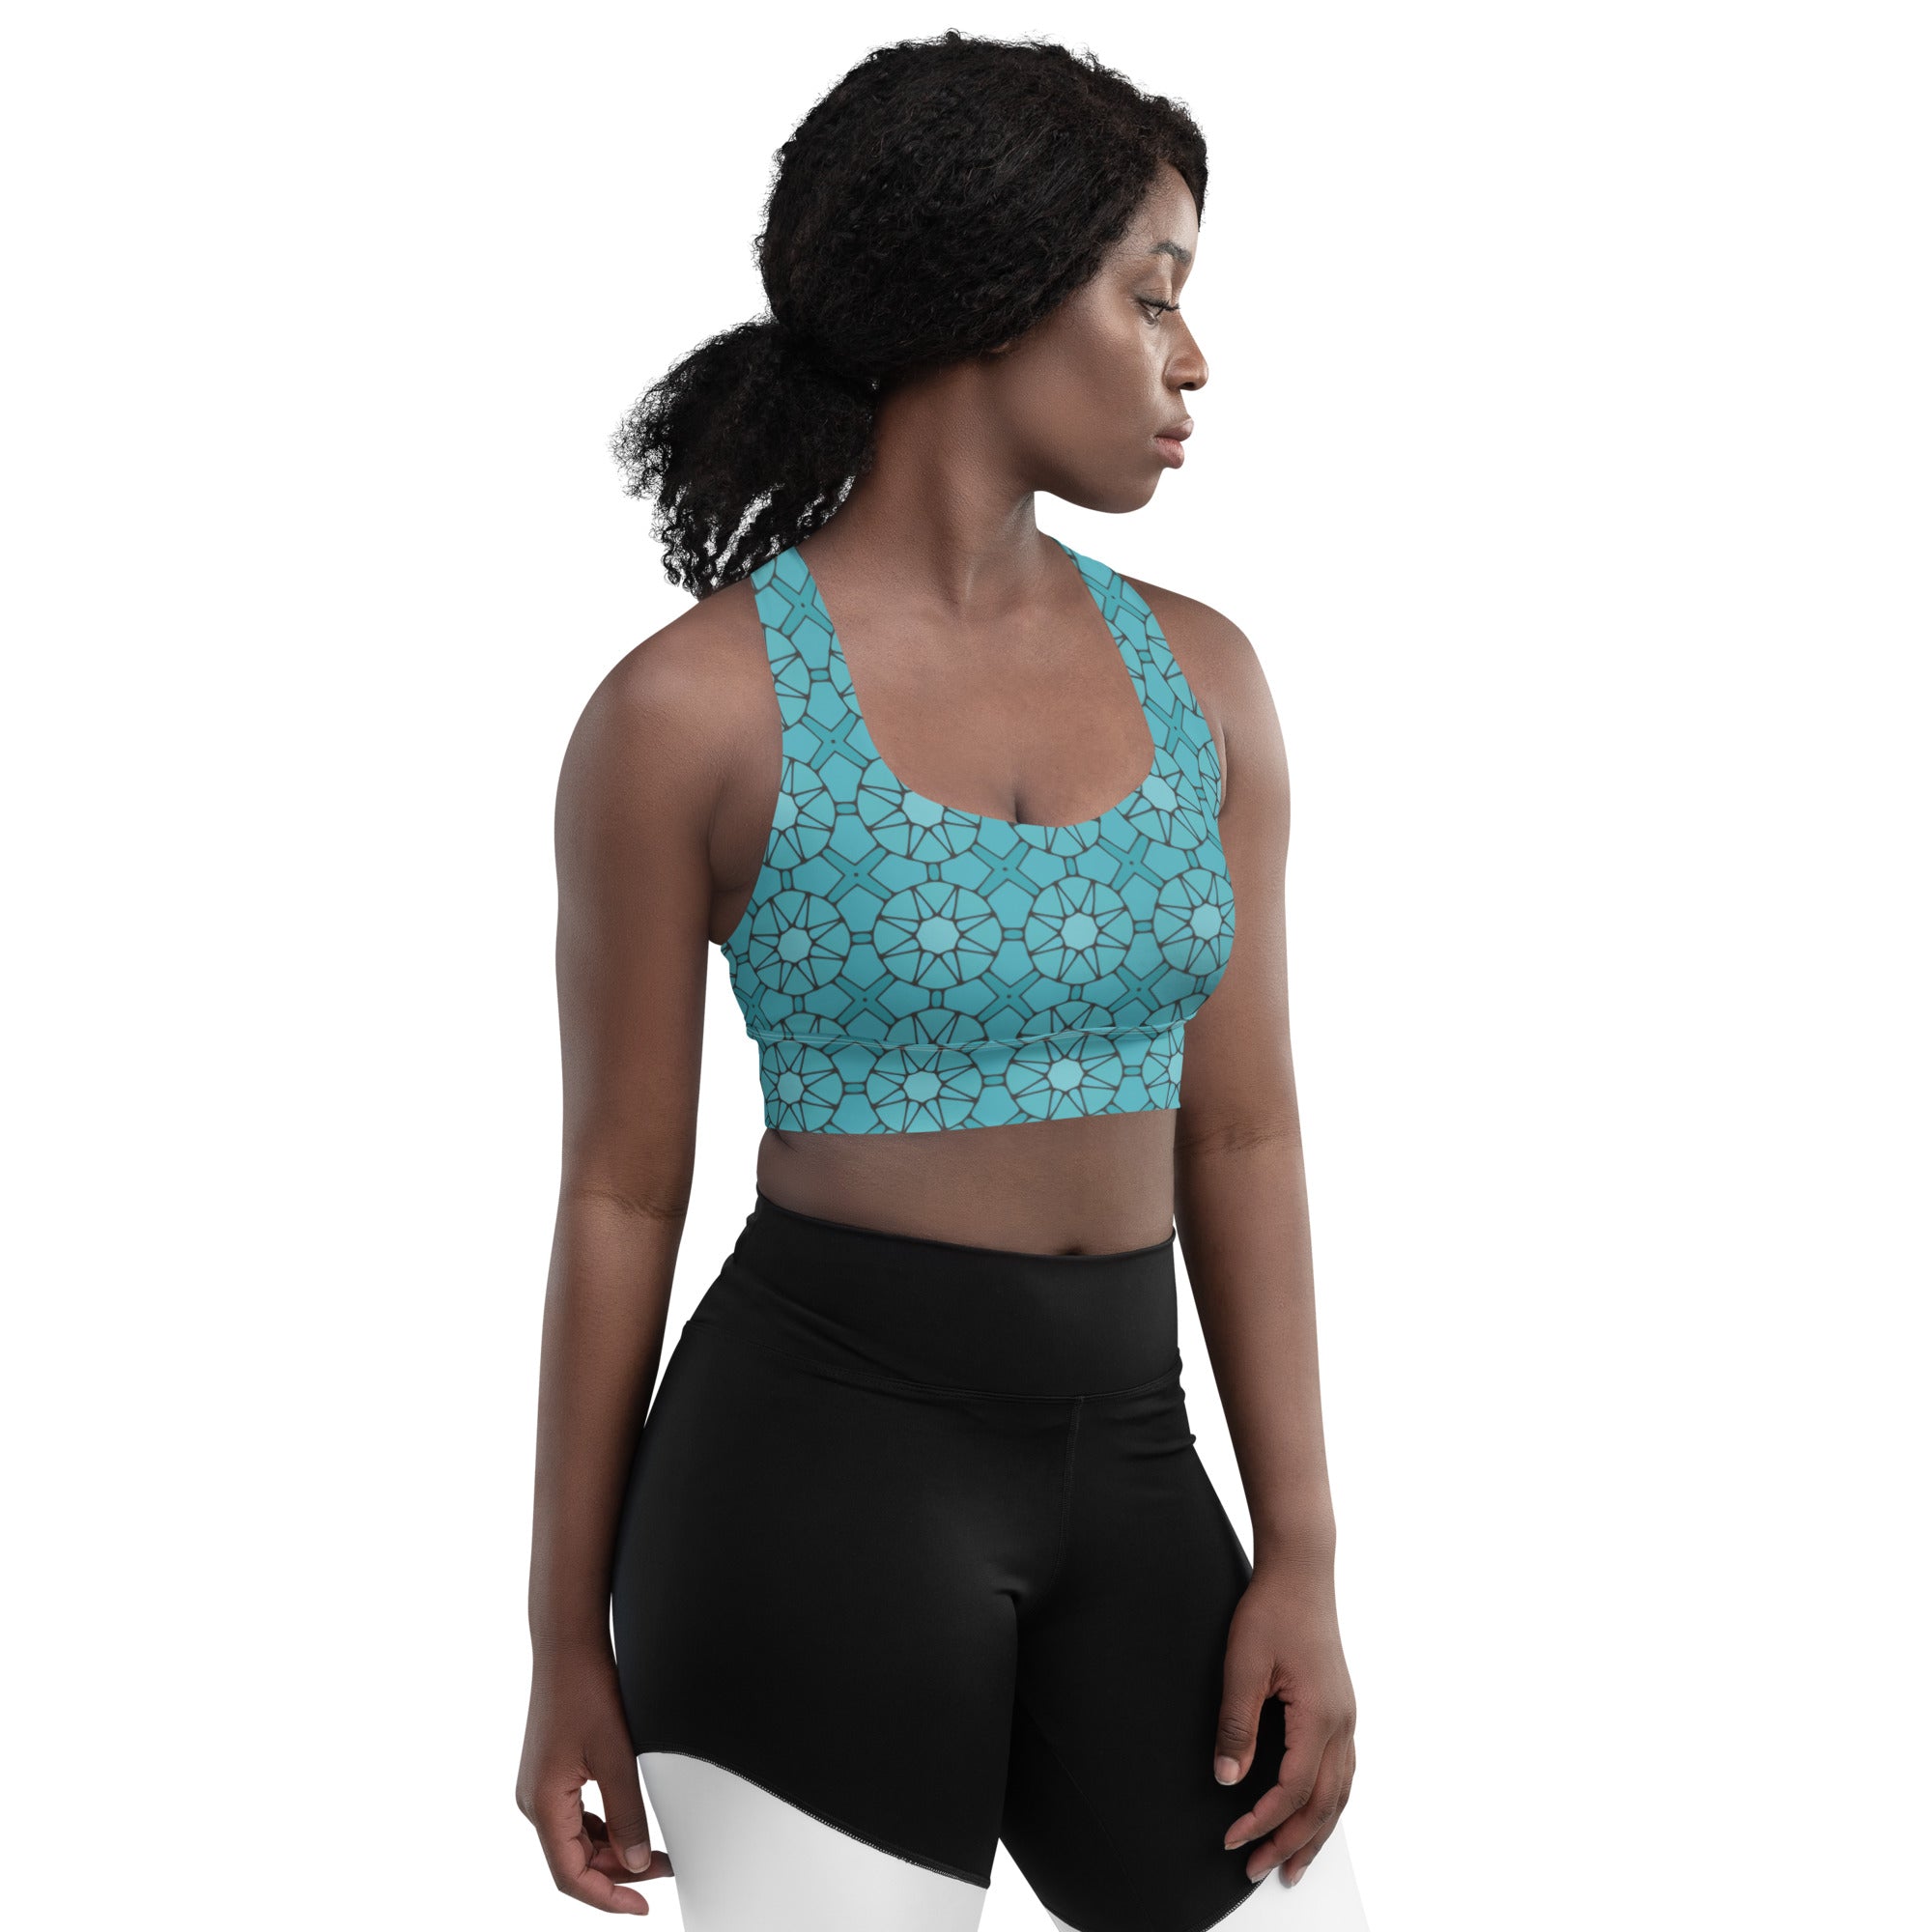 Green Starry patterned Longline sports bra, by Sensus Studio Design